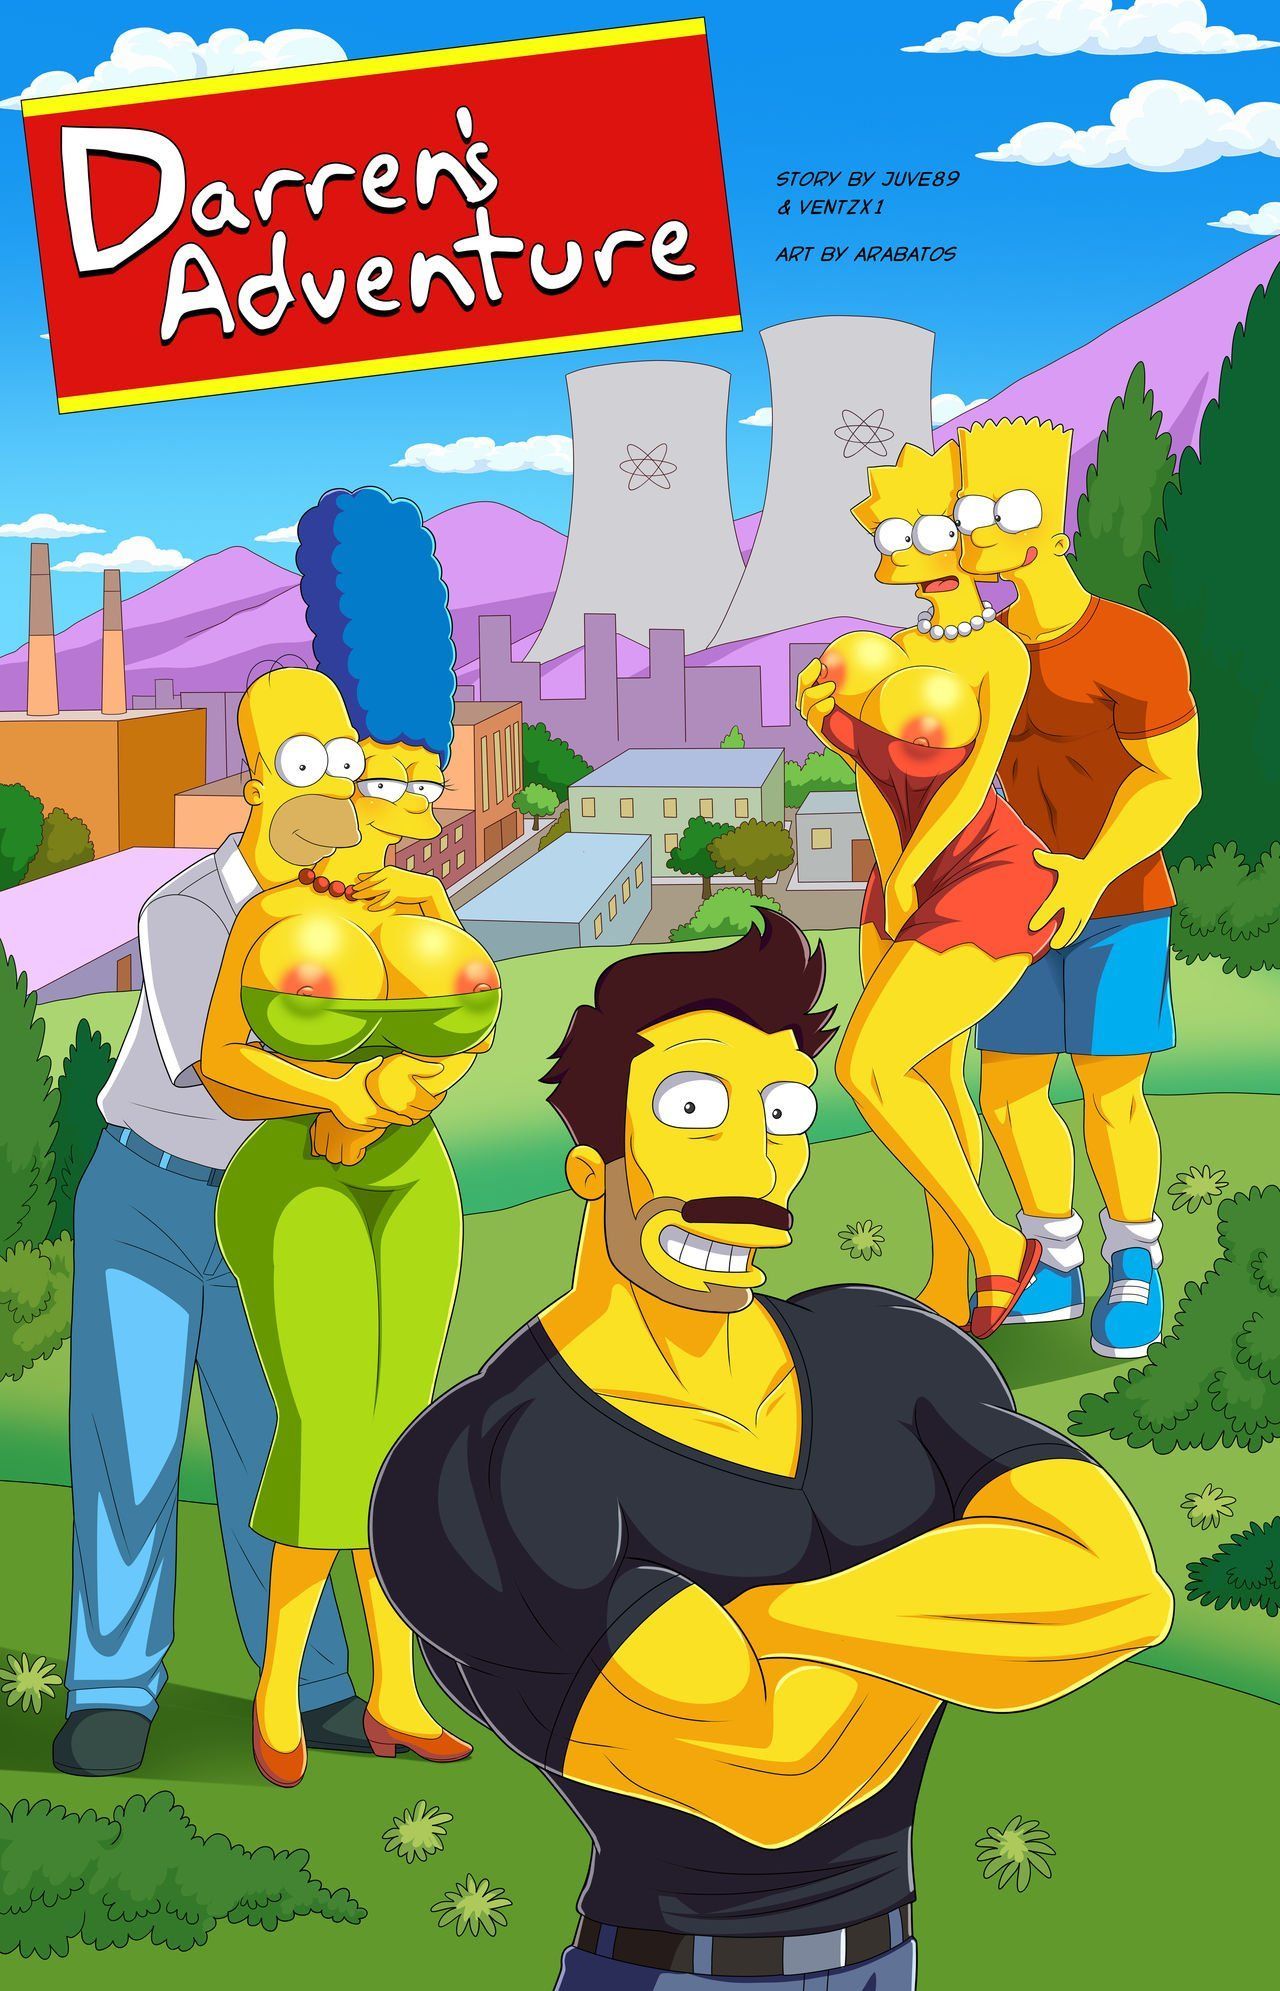 Simpsons sex clips